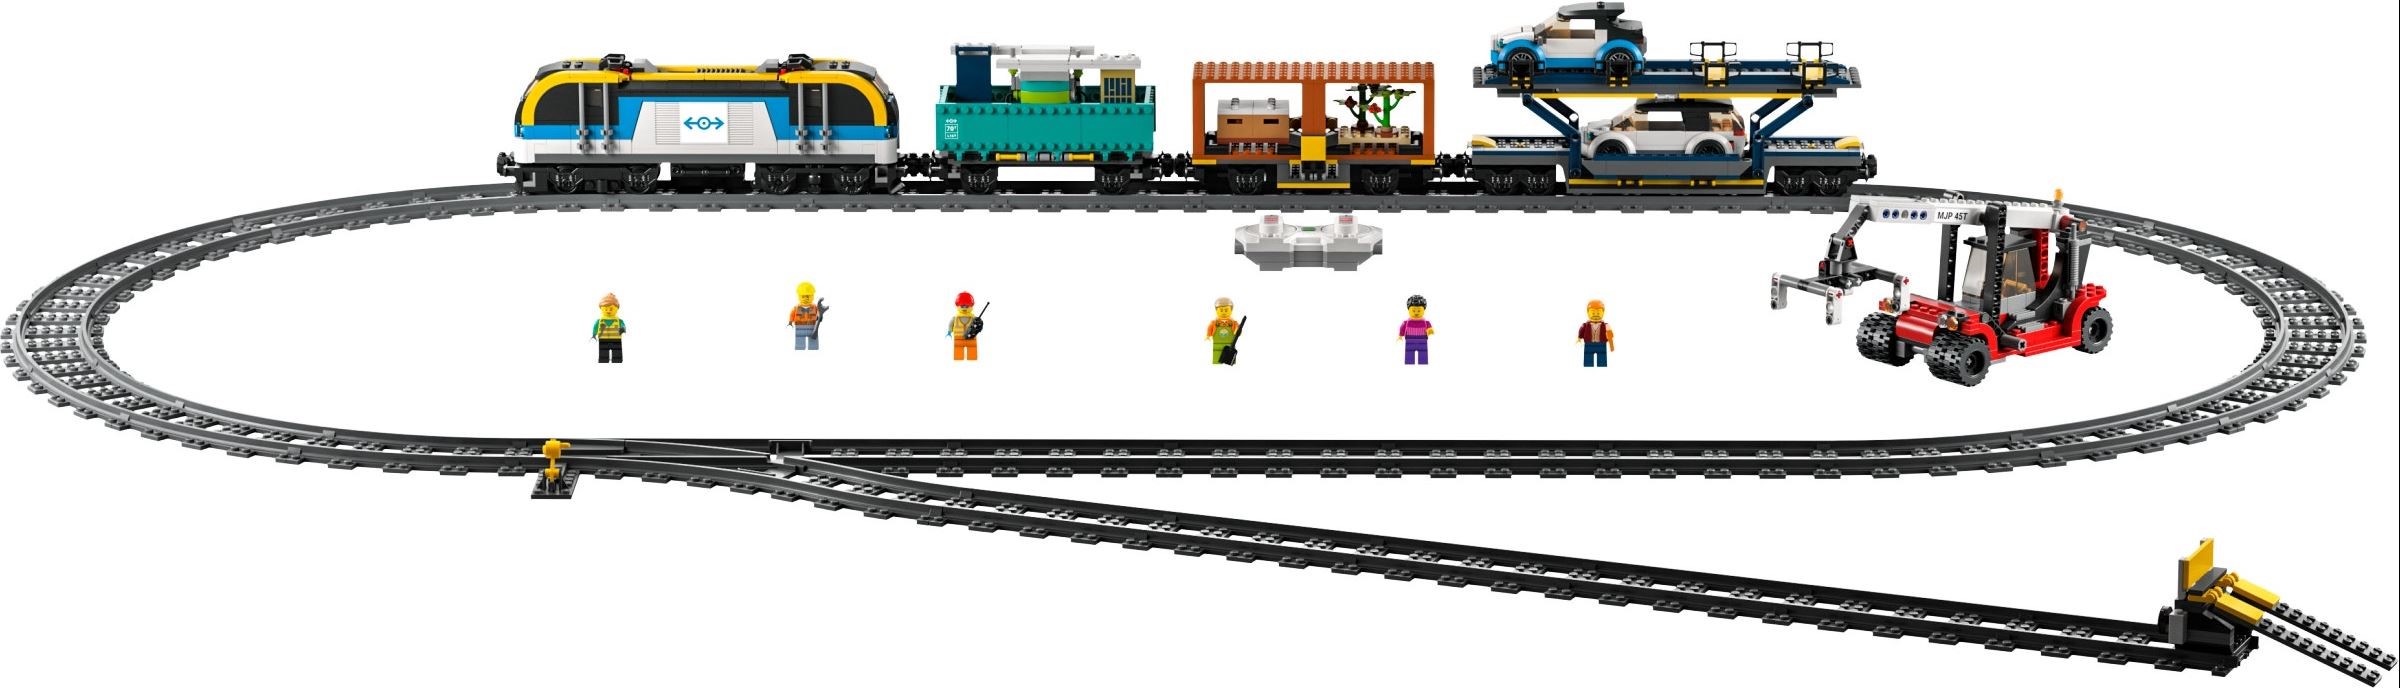 tweet Ark Senator City trains scheduled to arrive soon | Brickset: LEGO set guide and database